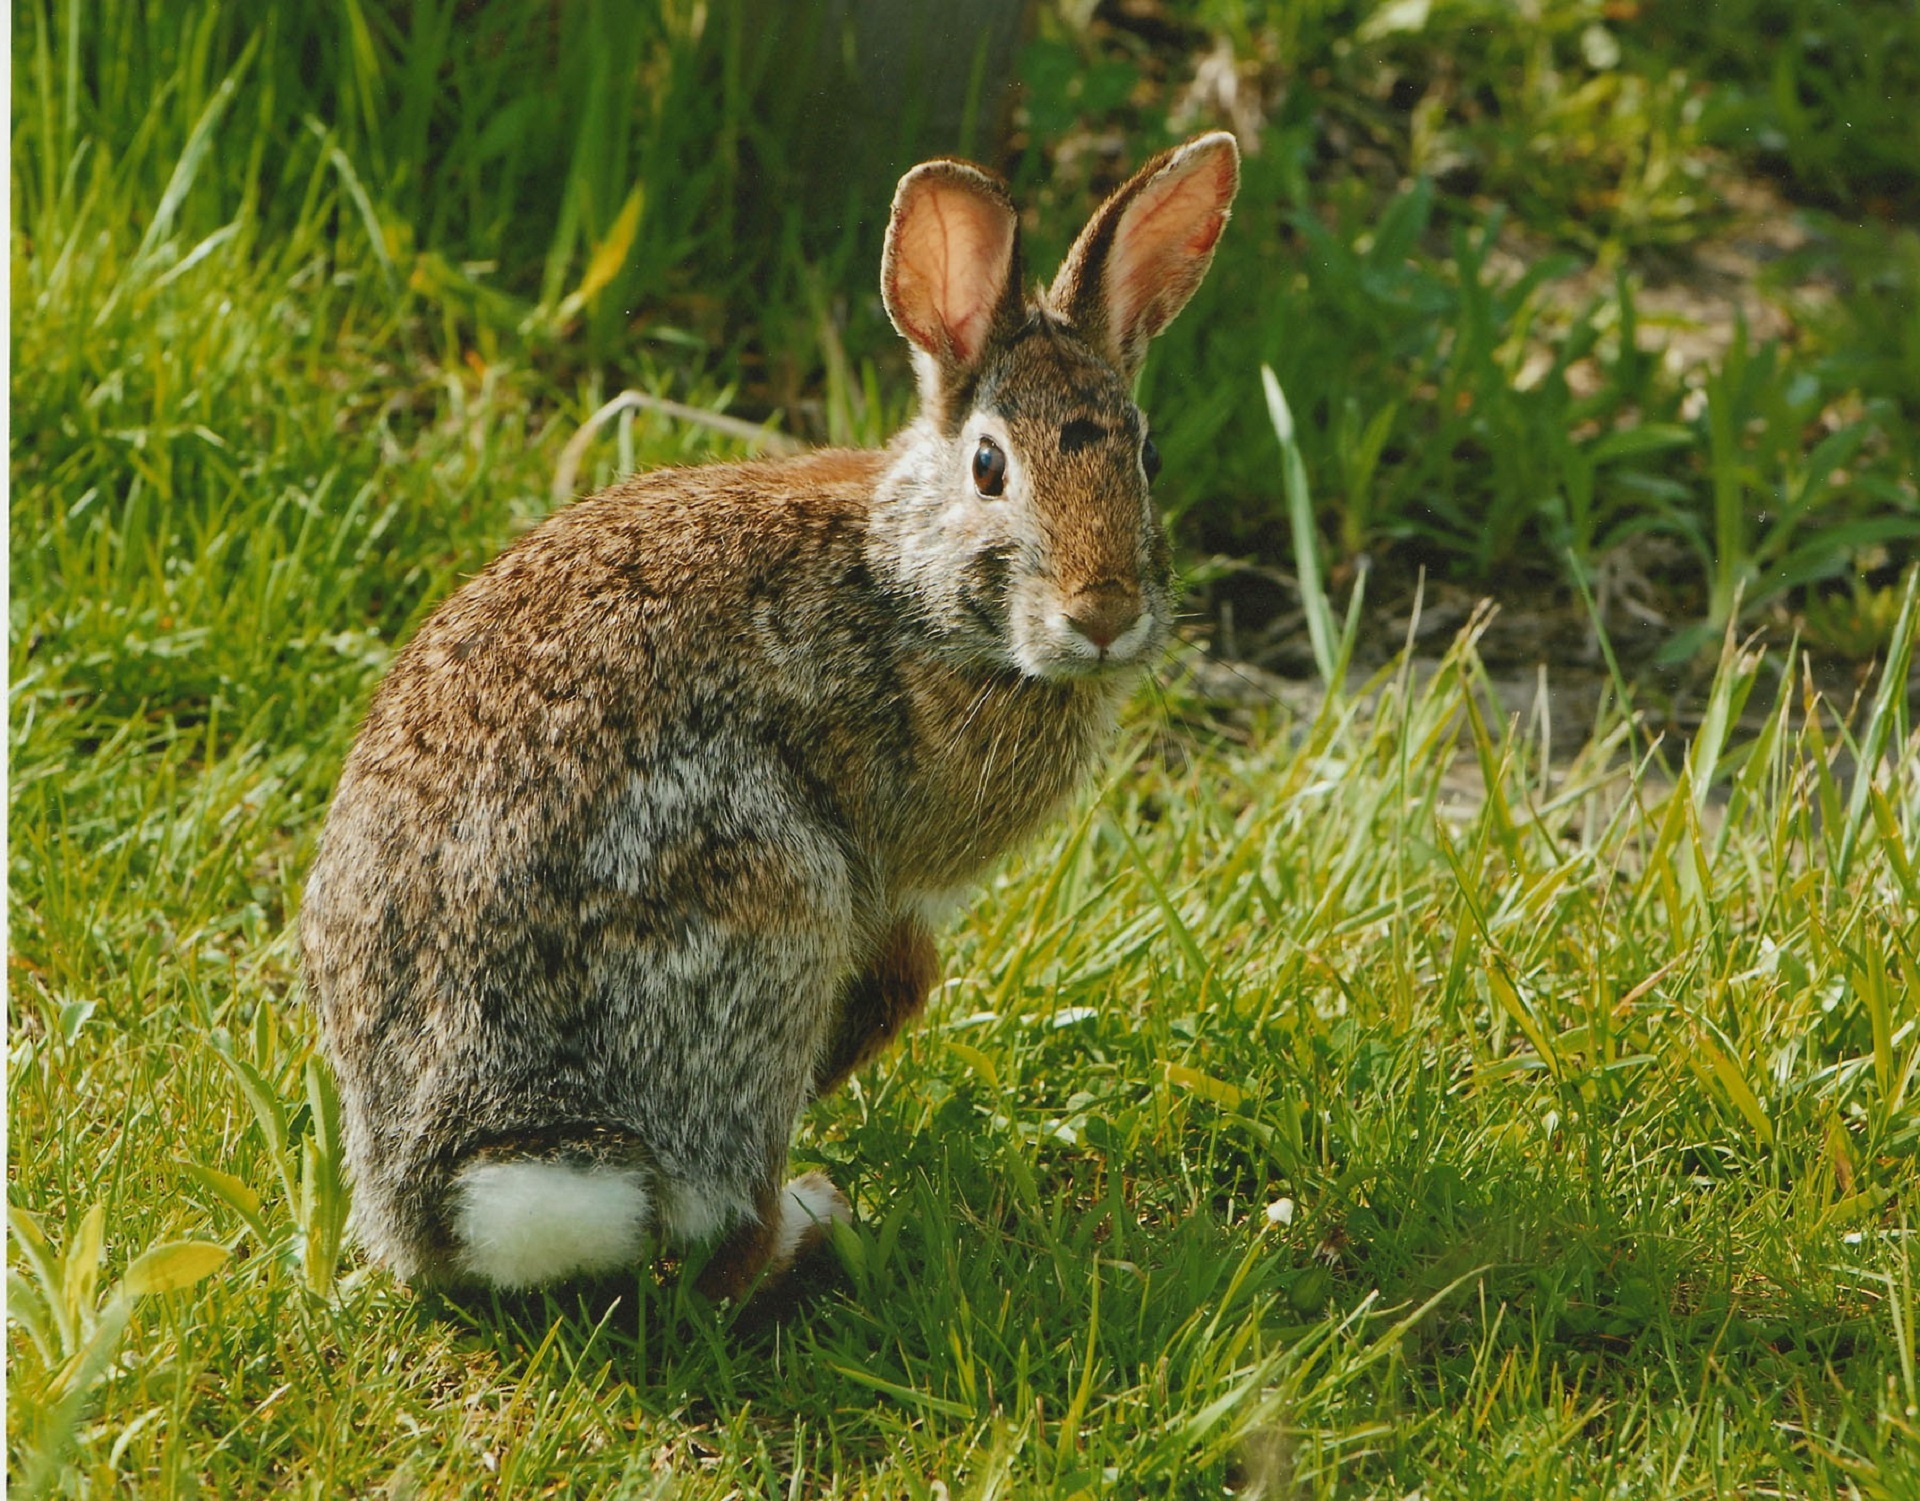 У зайца хвост короткий а уши